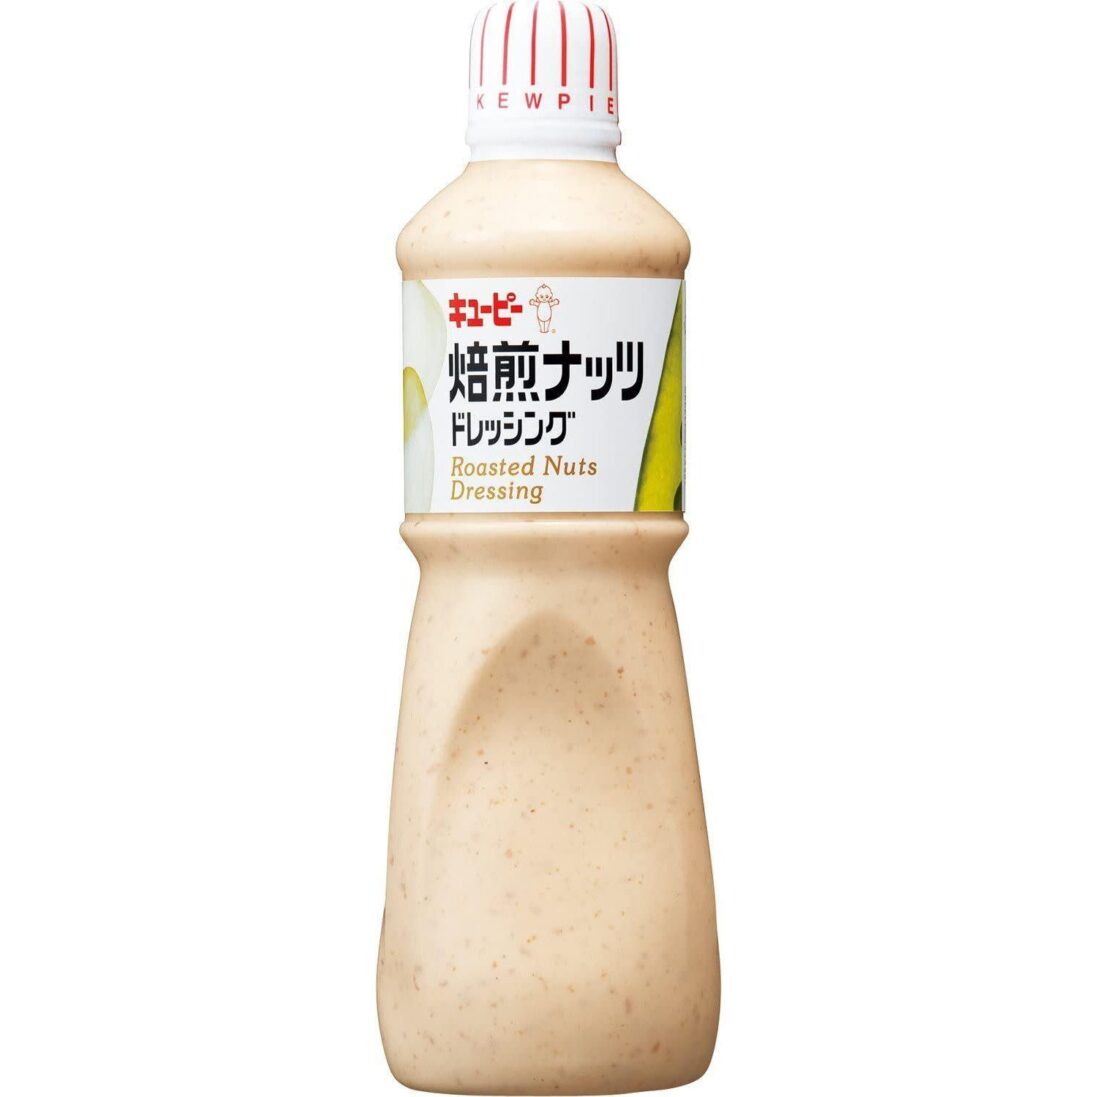 Kewpie-Roasted-Nuts-Dressing-1000ml-Japanese-Taste_672e59c2-12b0-41db-bd05-c06901a569c7_2048x.jpg